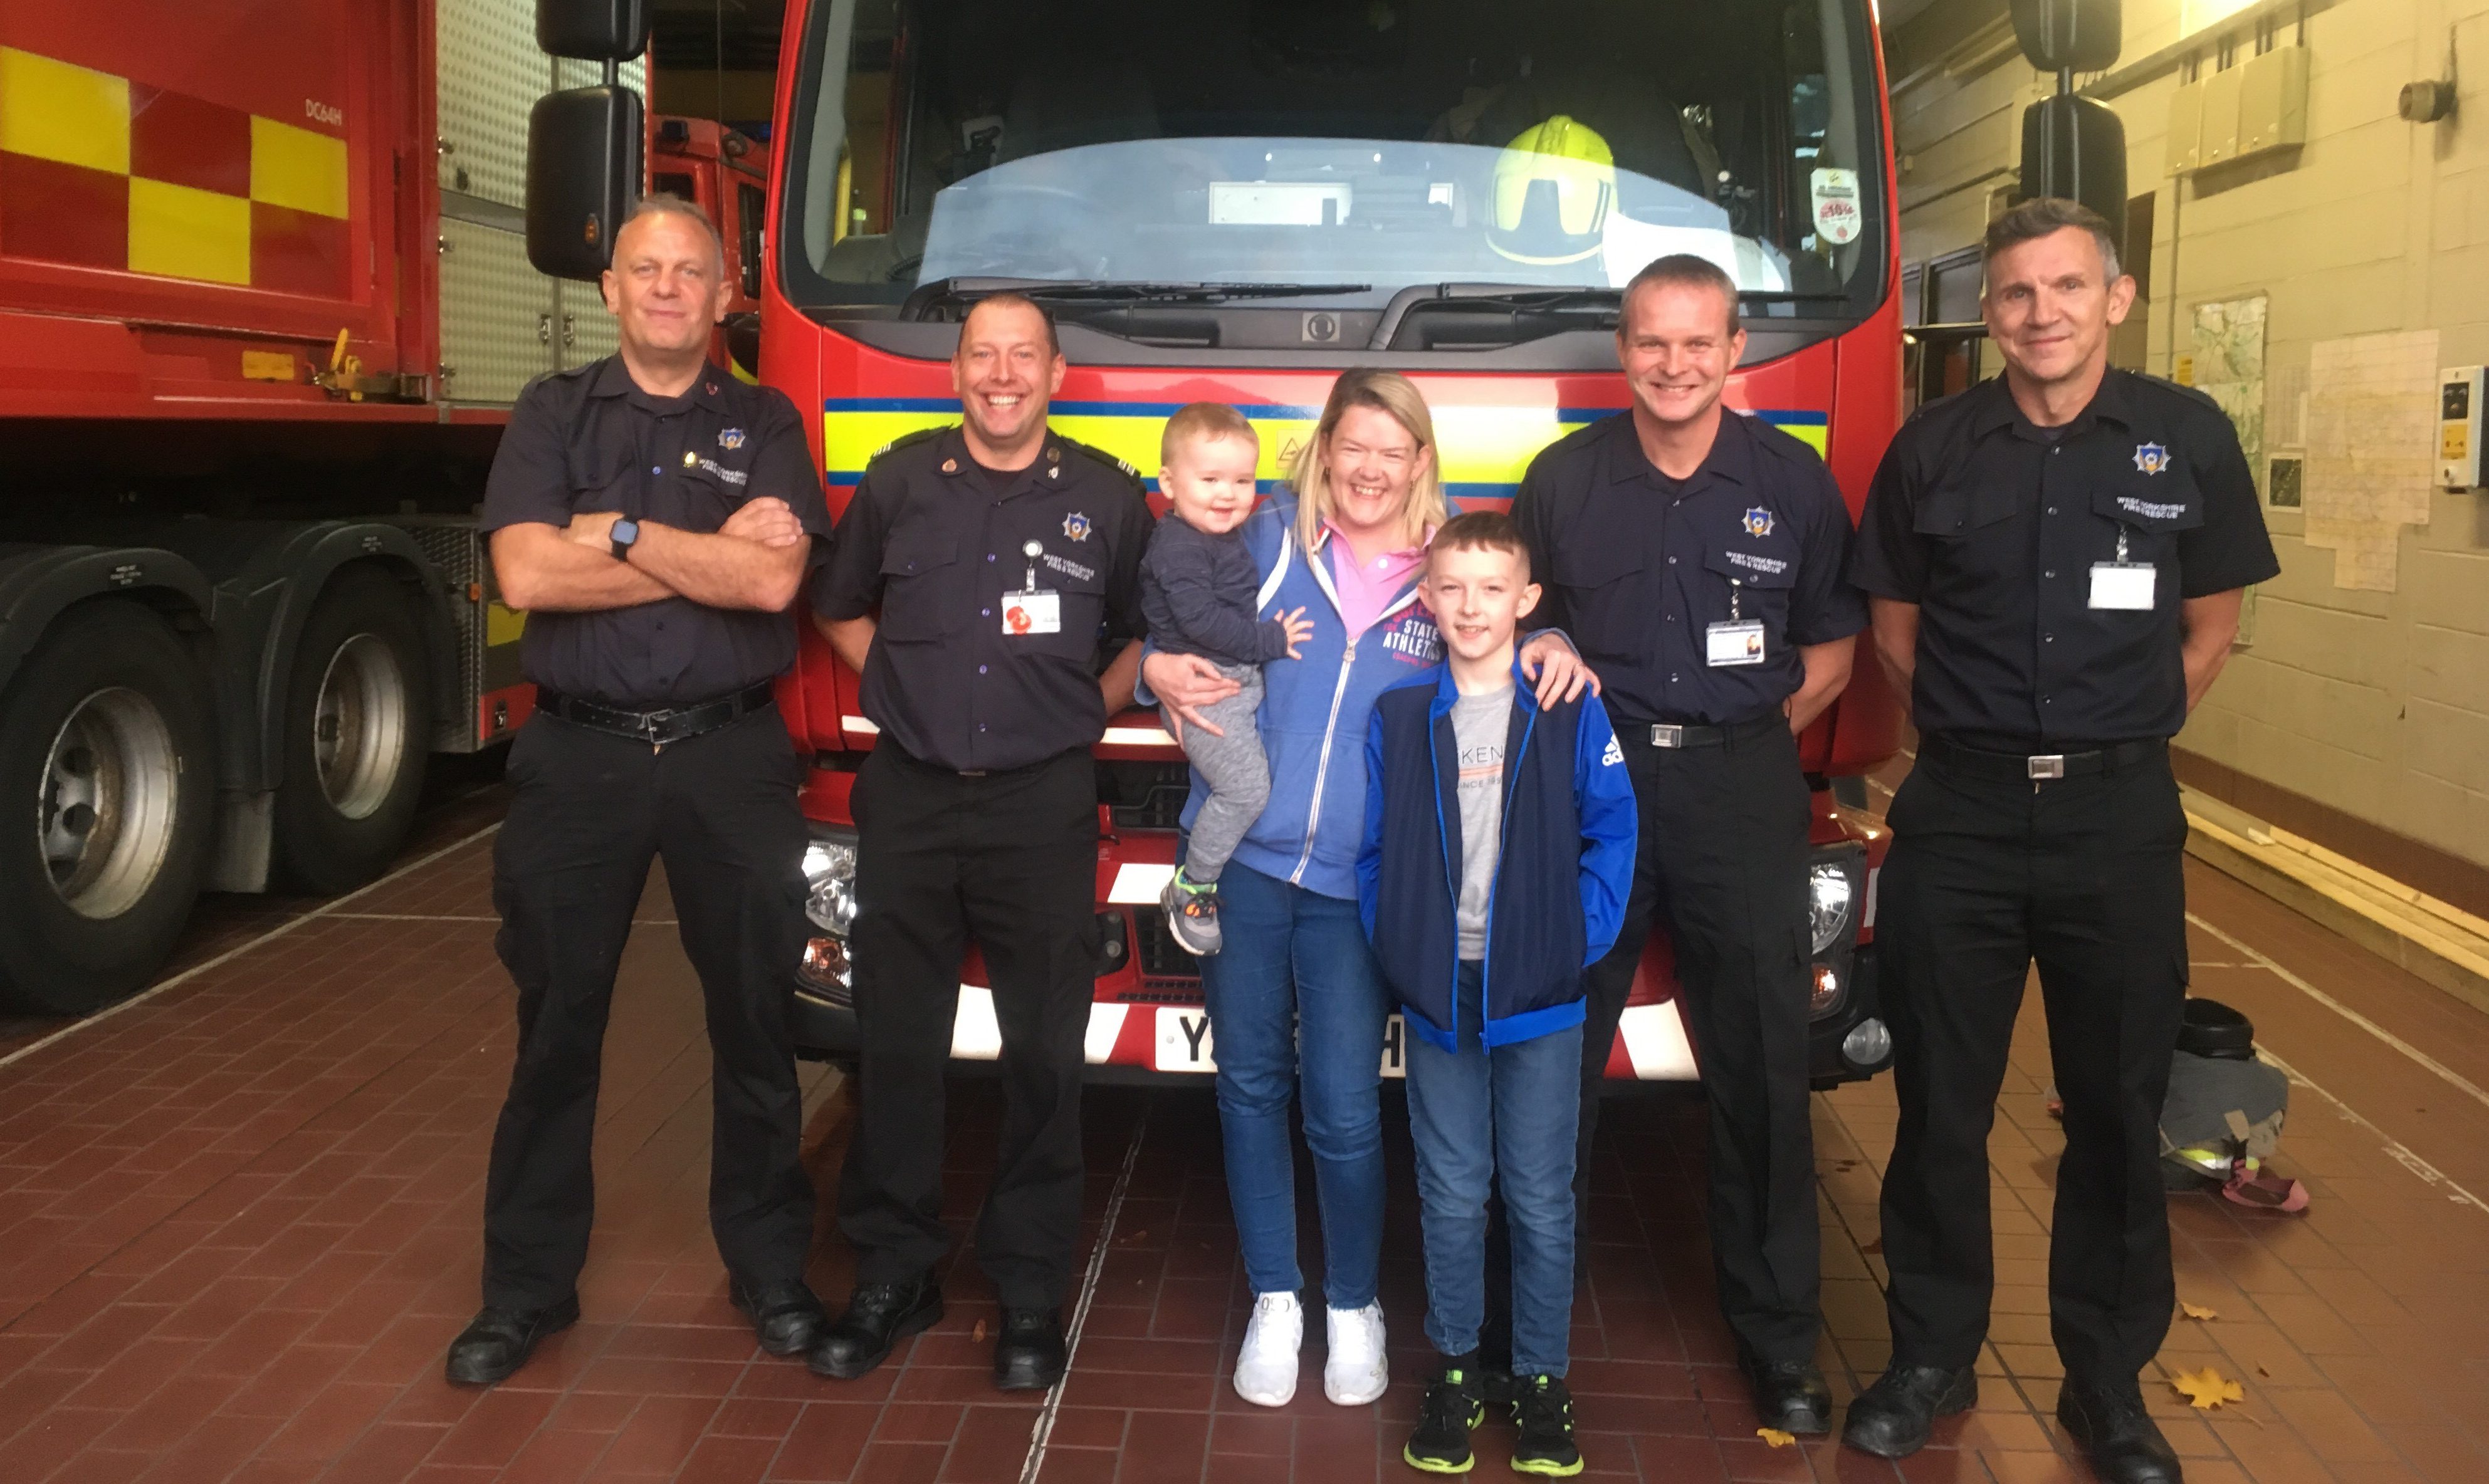 Leeds schoolboy doing his bit for new firefighter friends